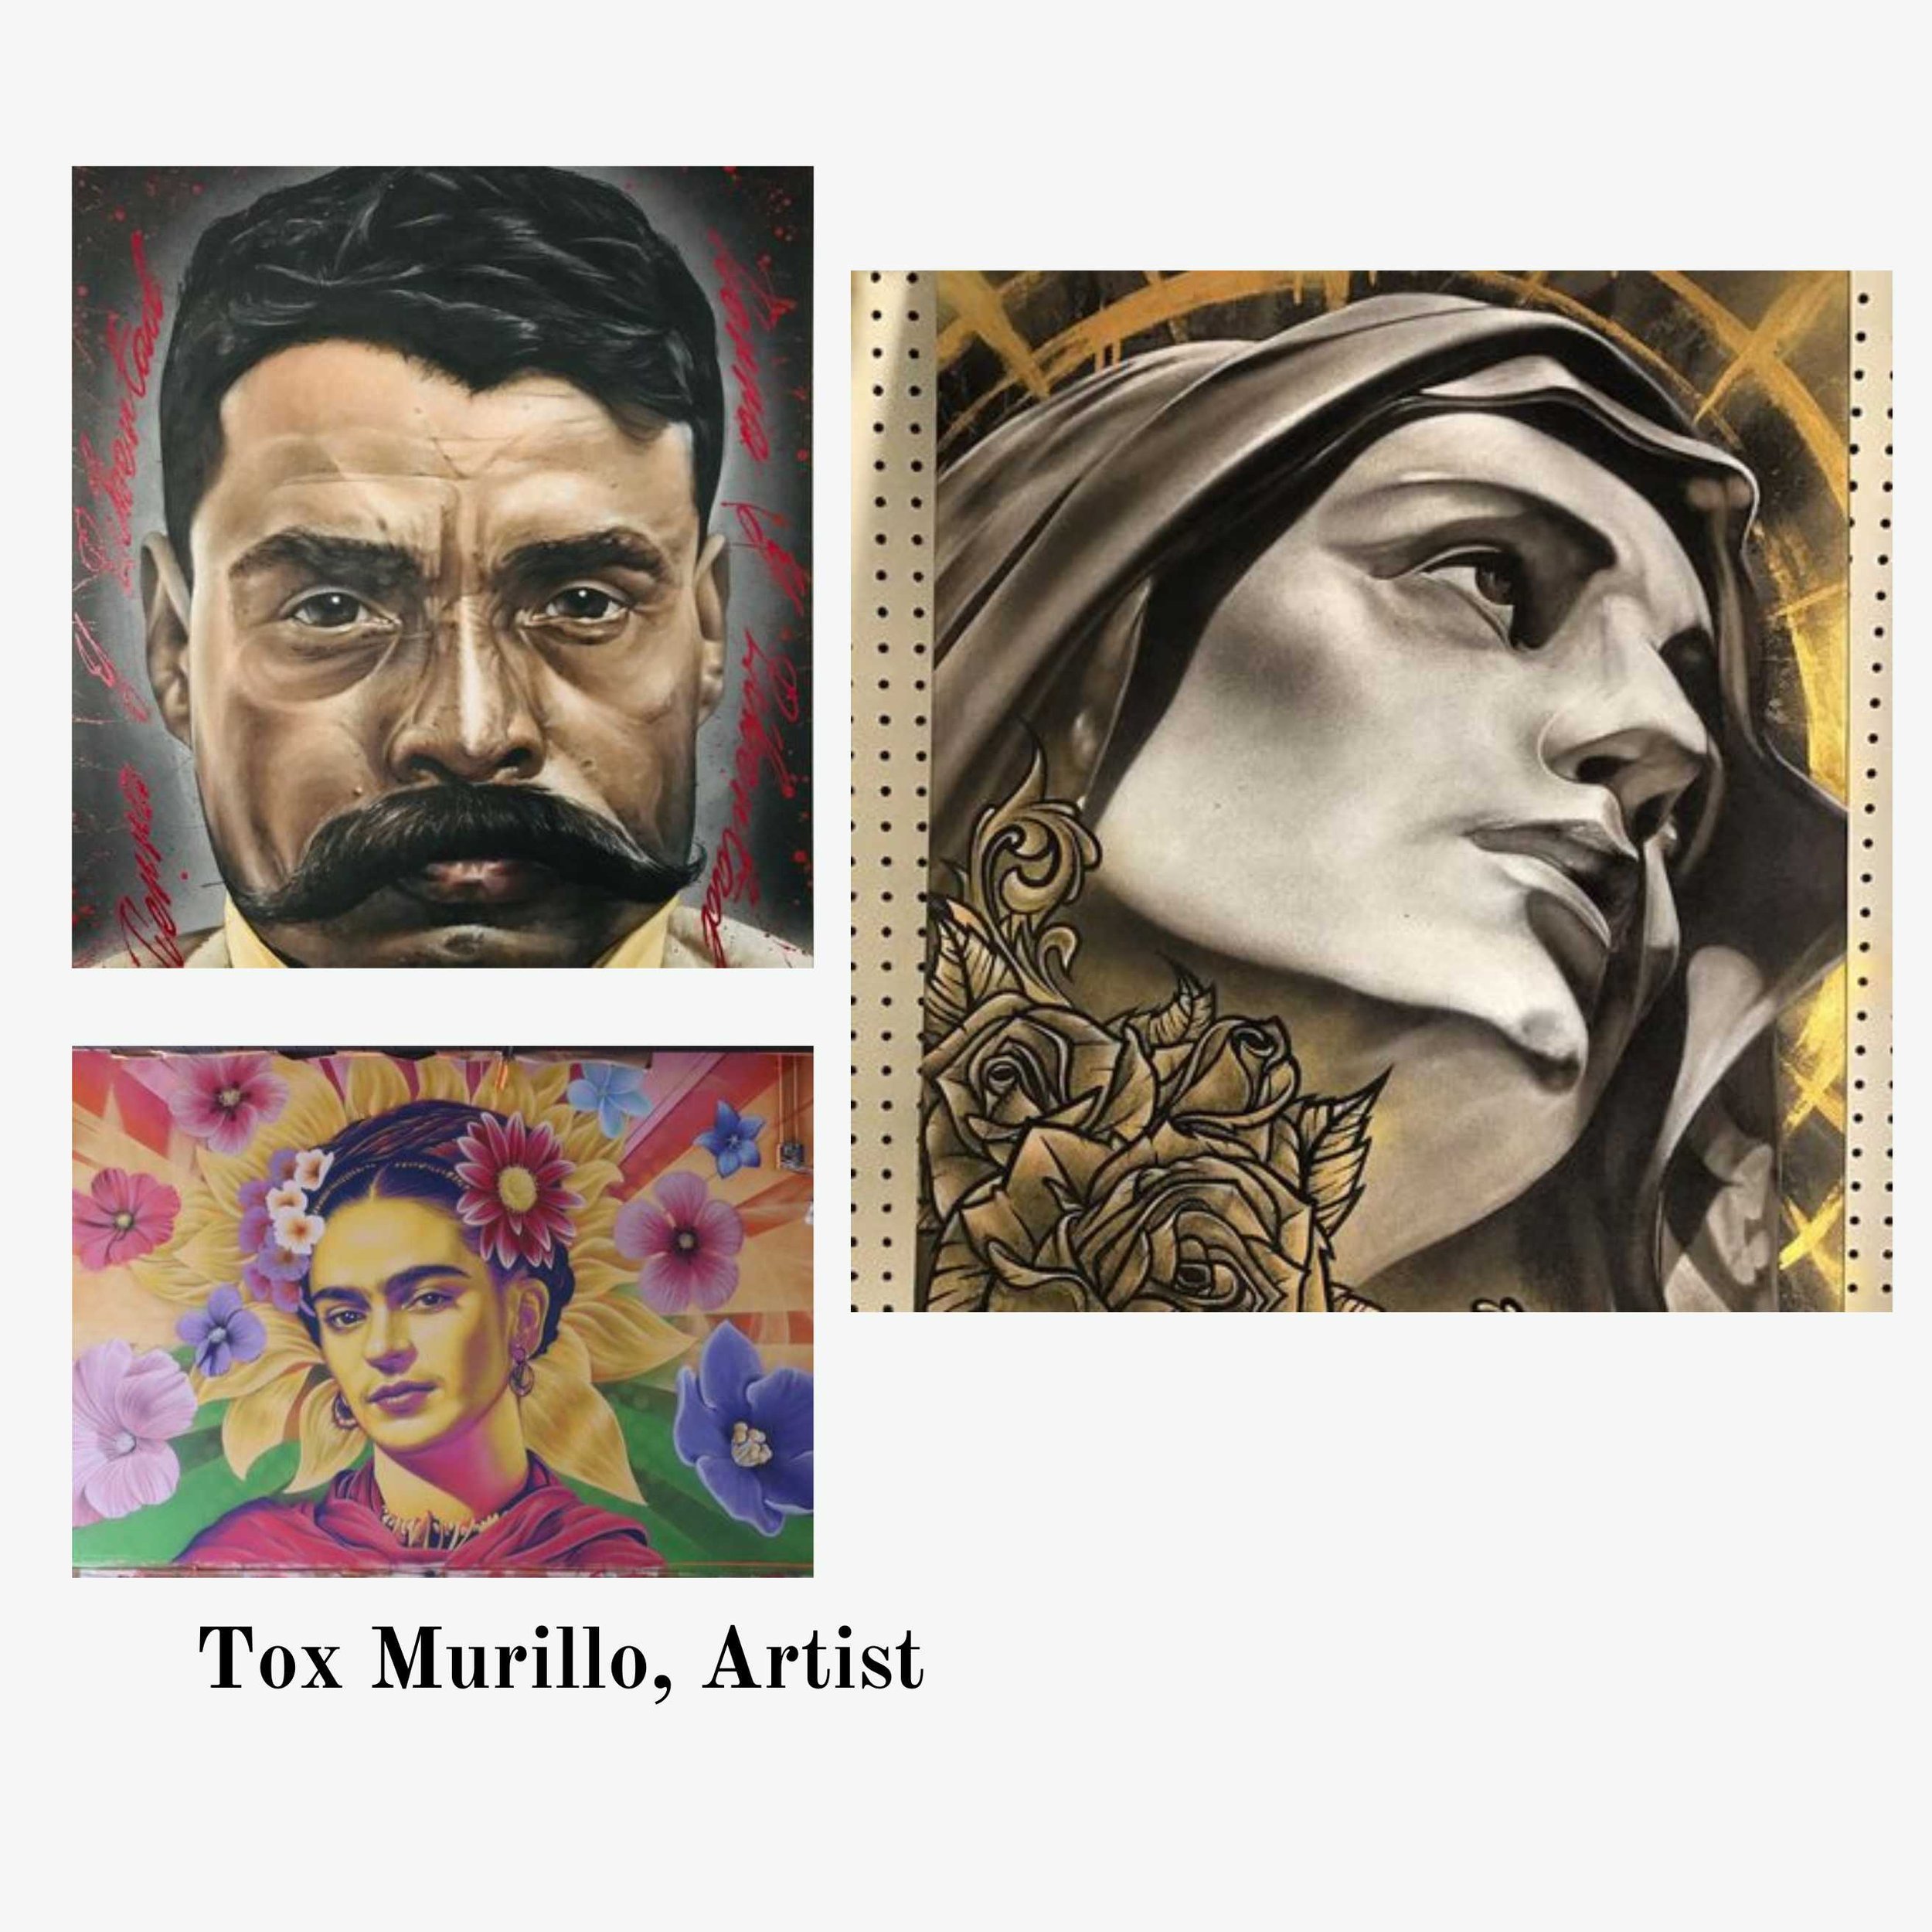 Tox Murillo, Artist (1).jpg